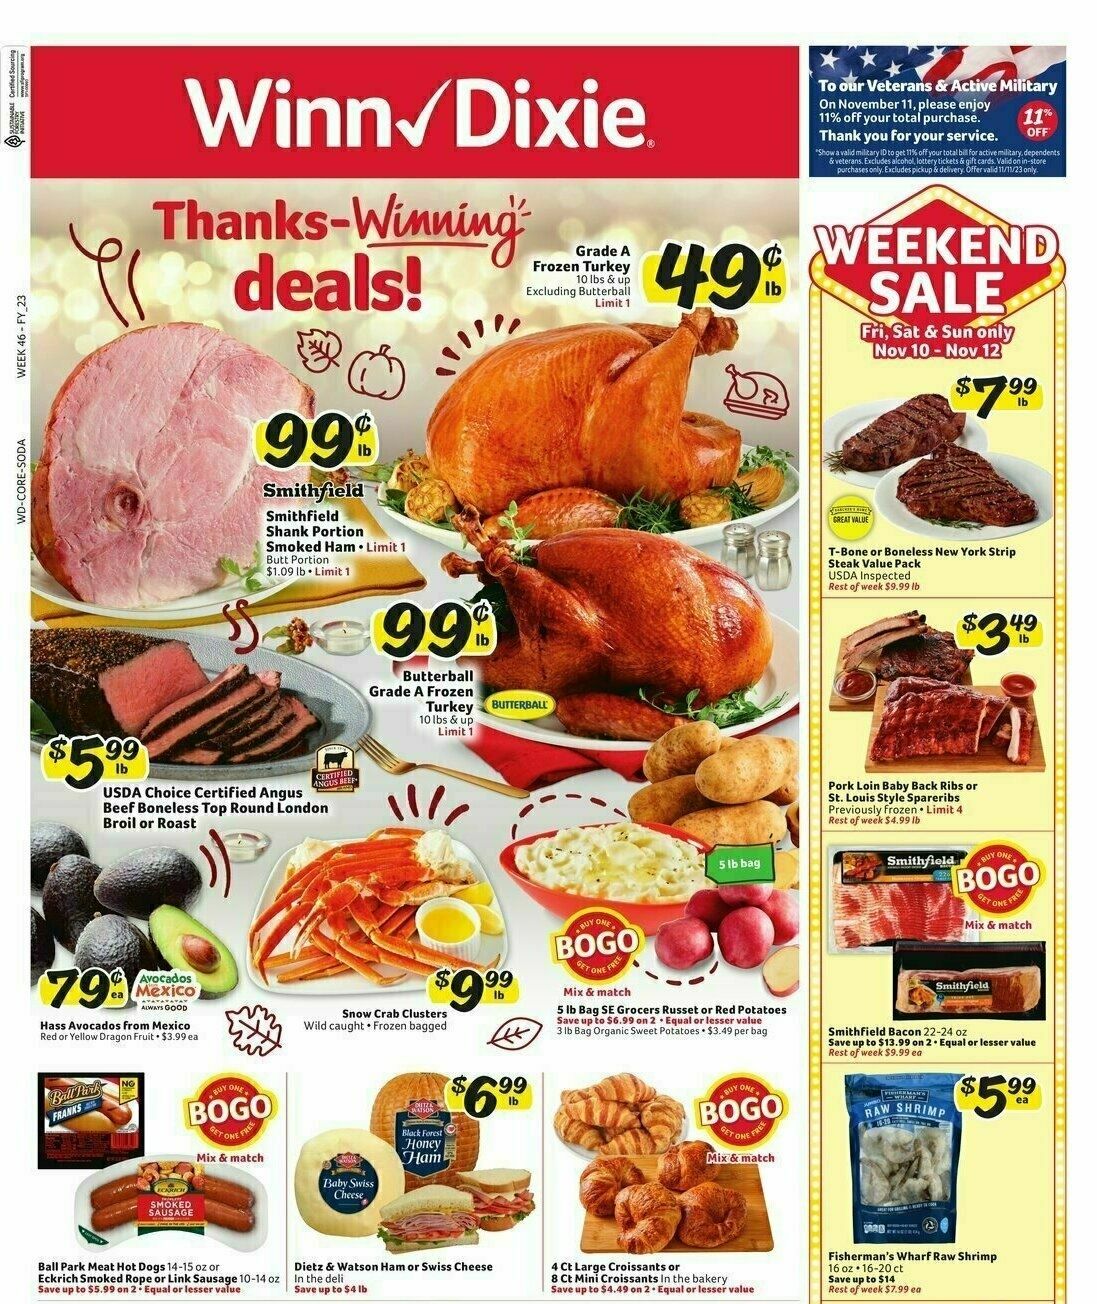 Winn-Dixie Weekly Ad from November 8